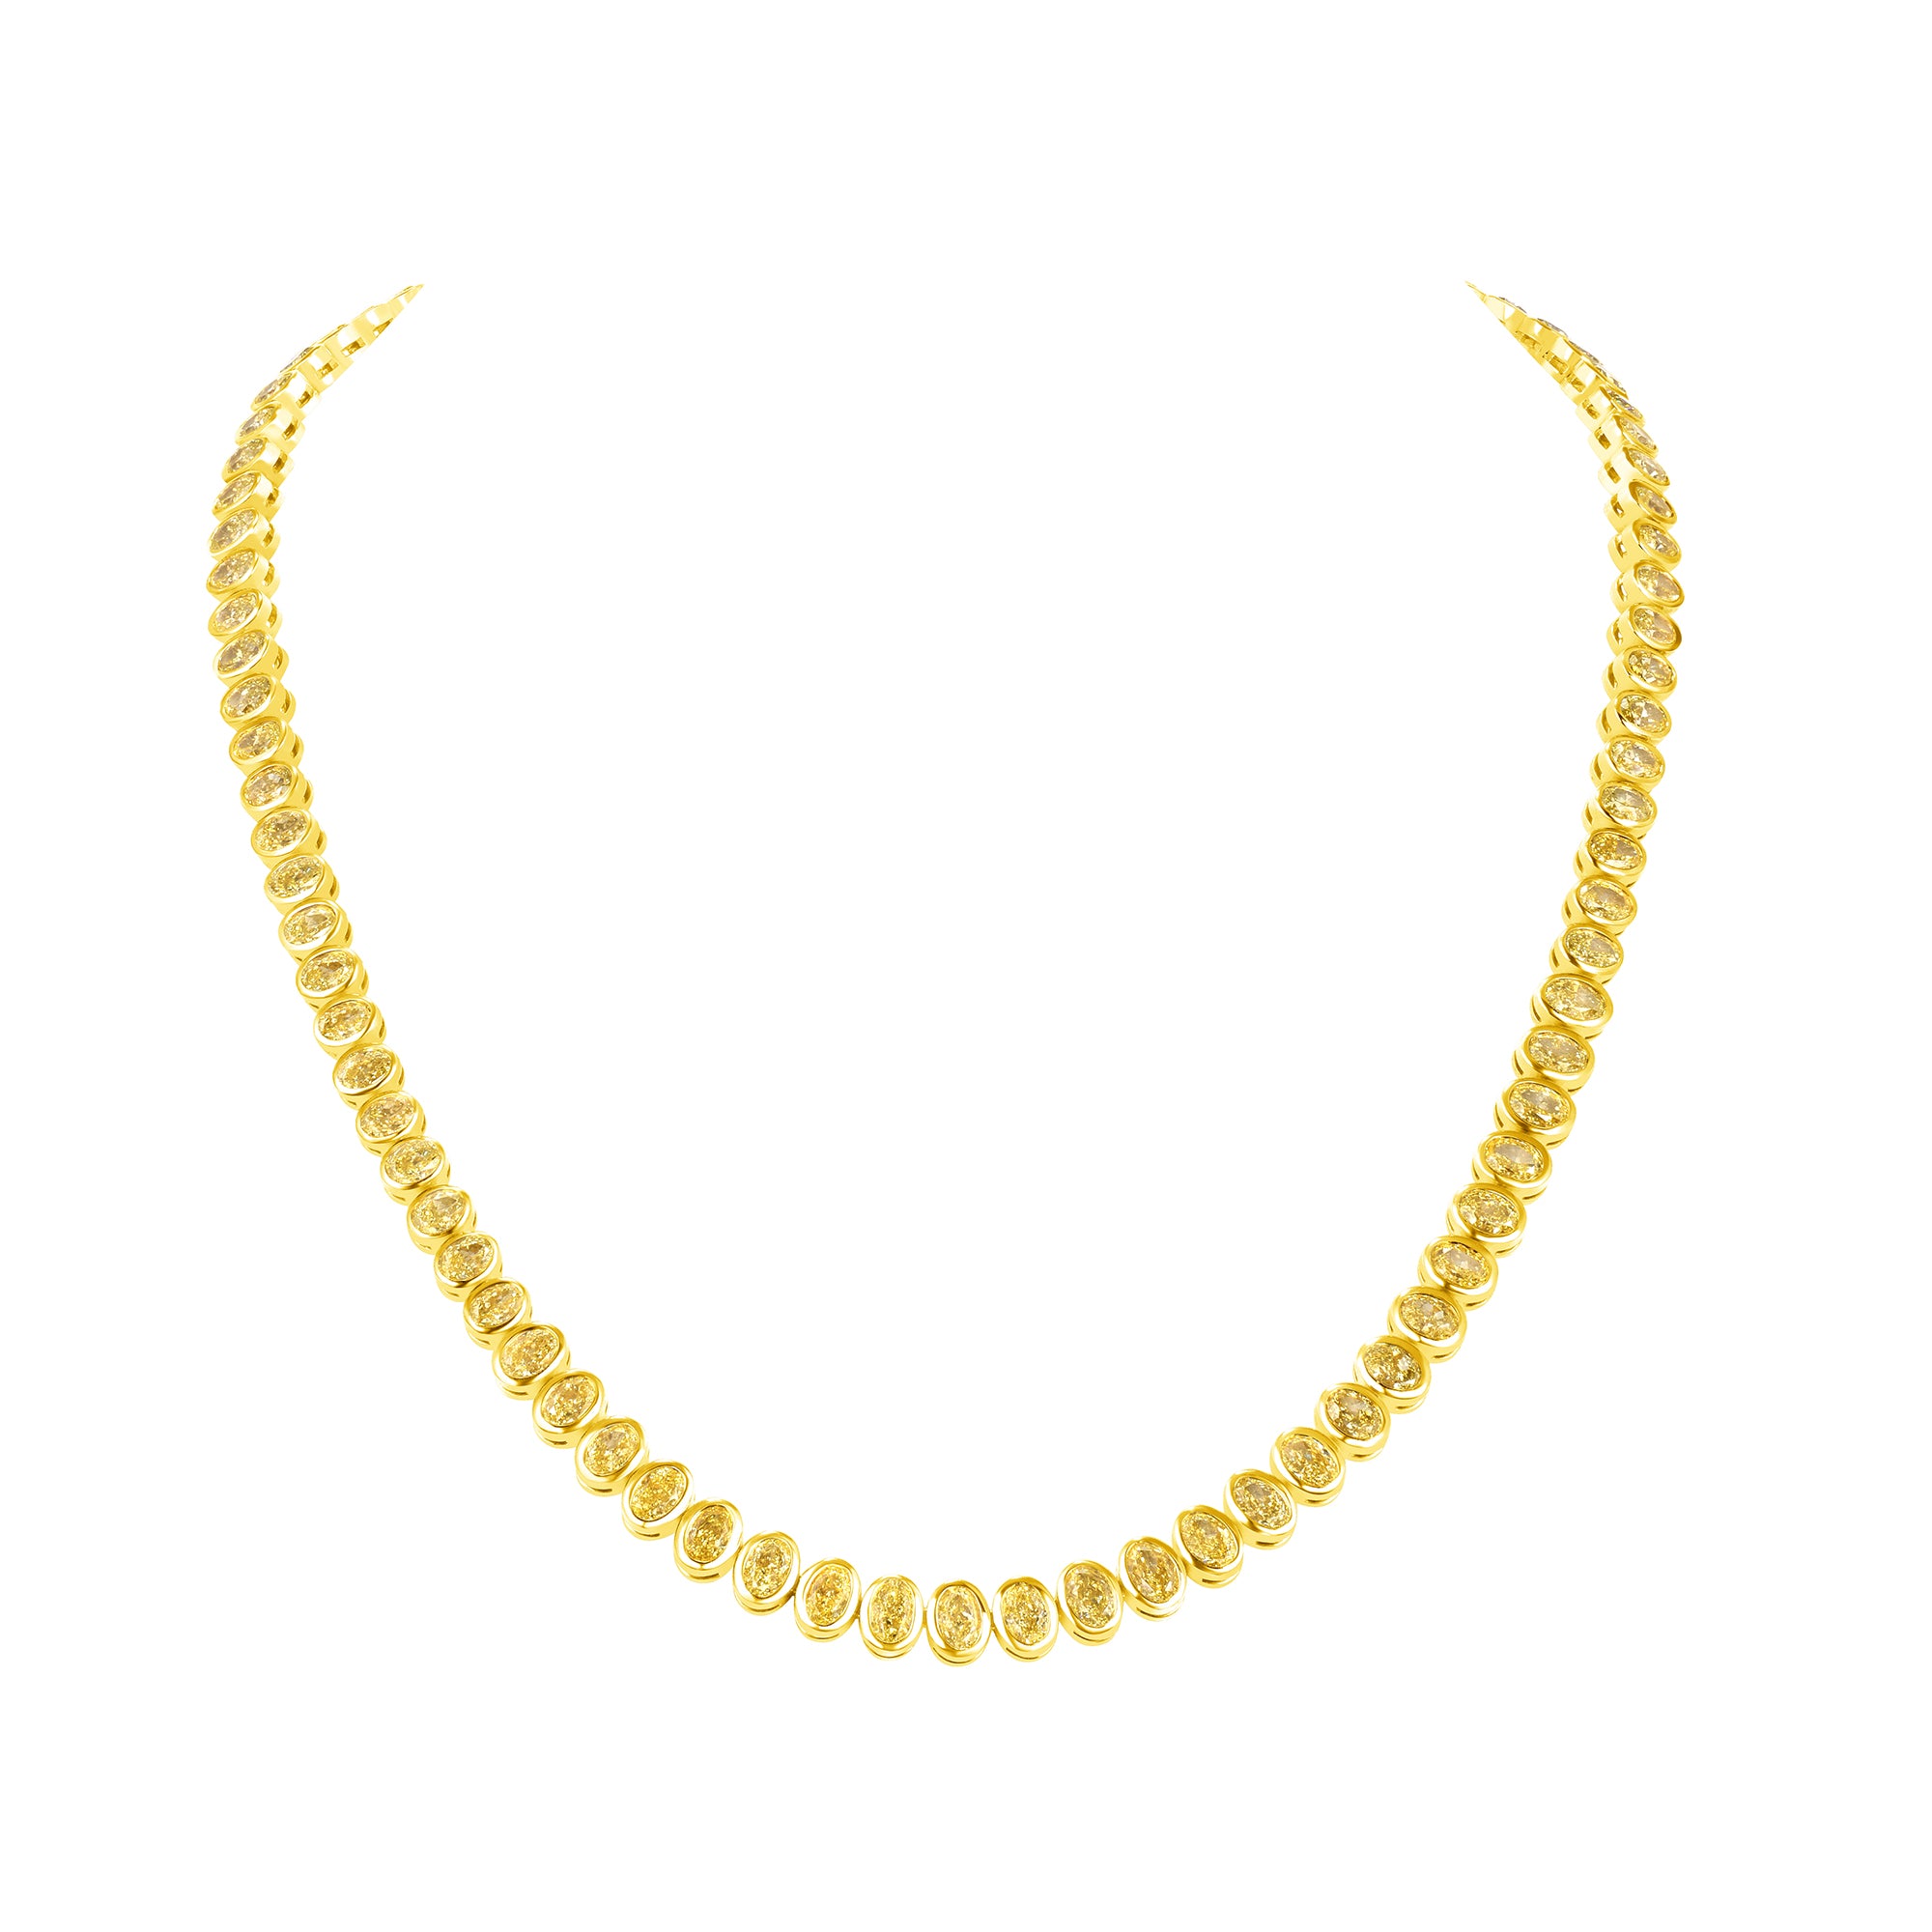 Oval Cut Bezel Set Yellow Diamond Tennis Necklace Set in 18 Karat Yellow Gold